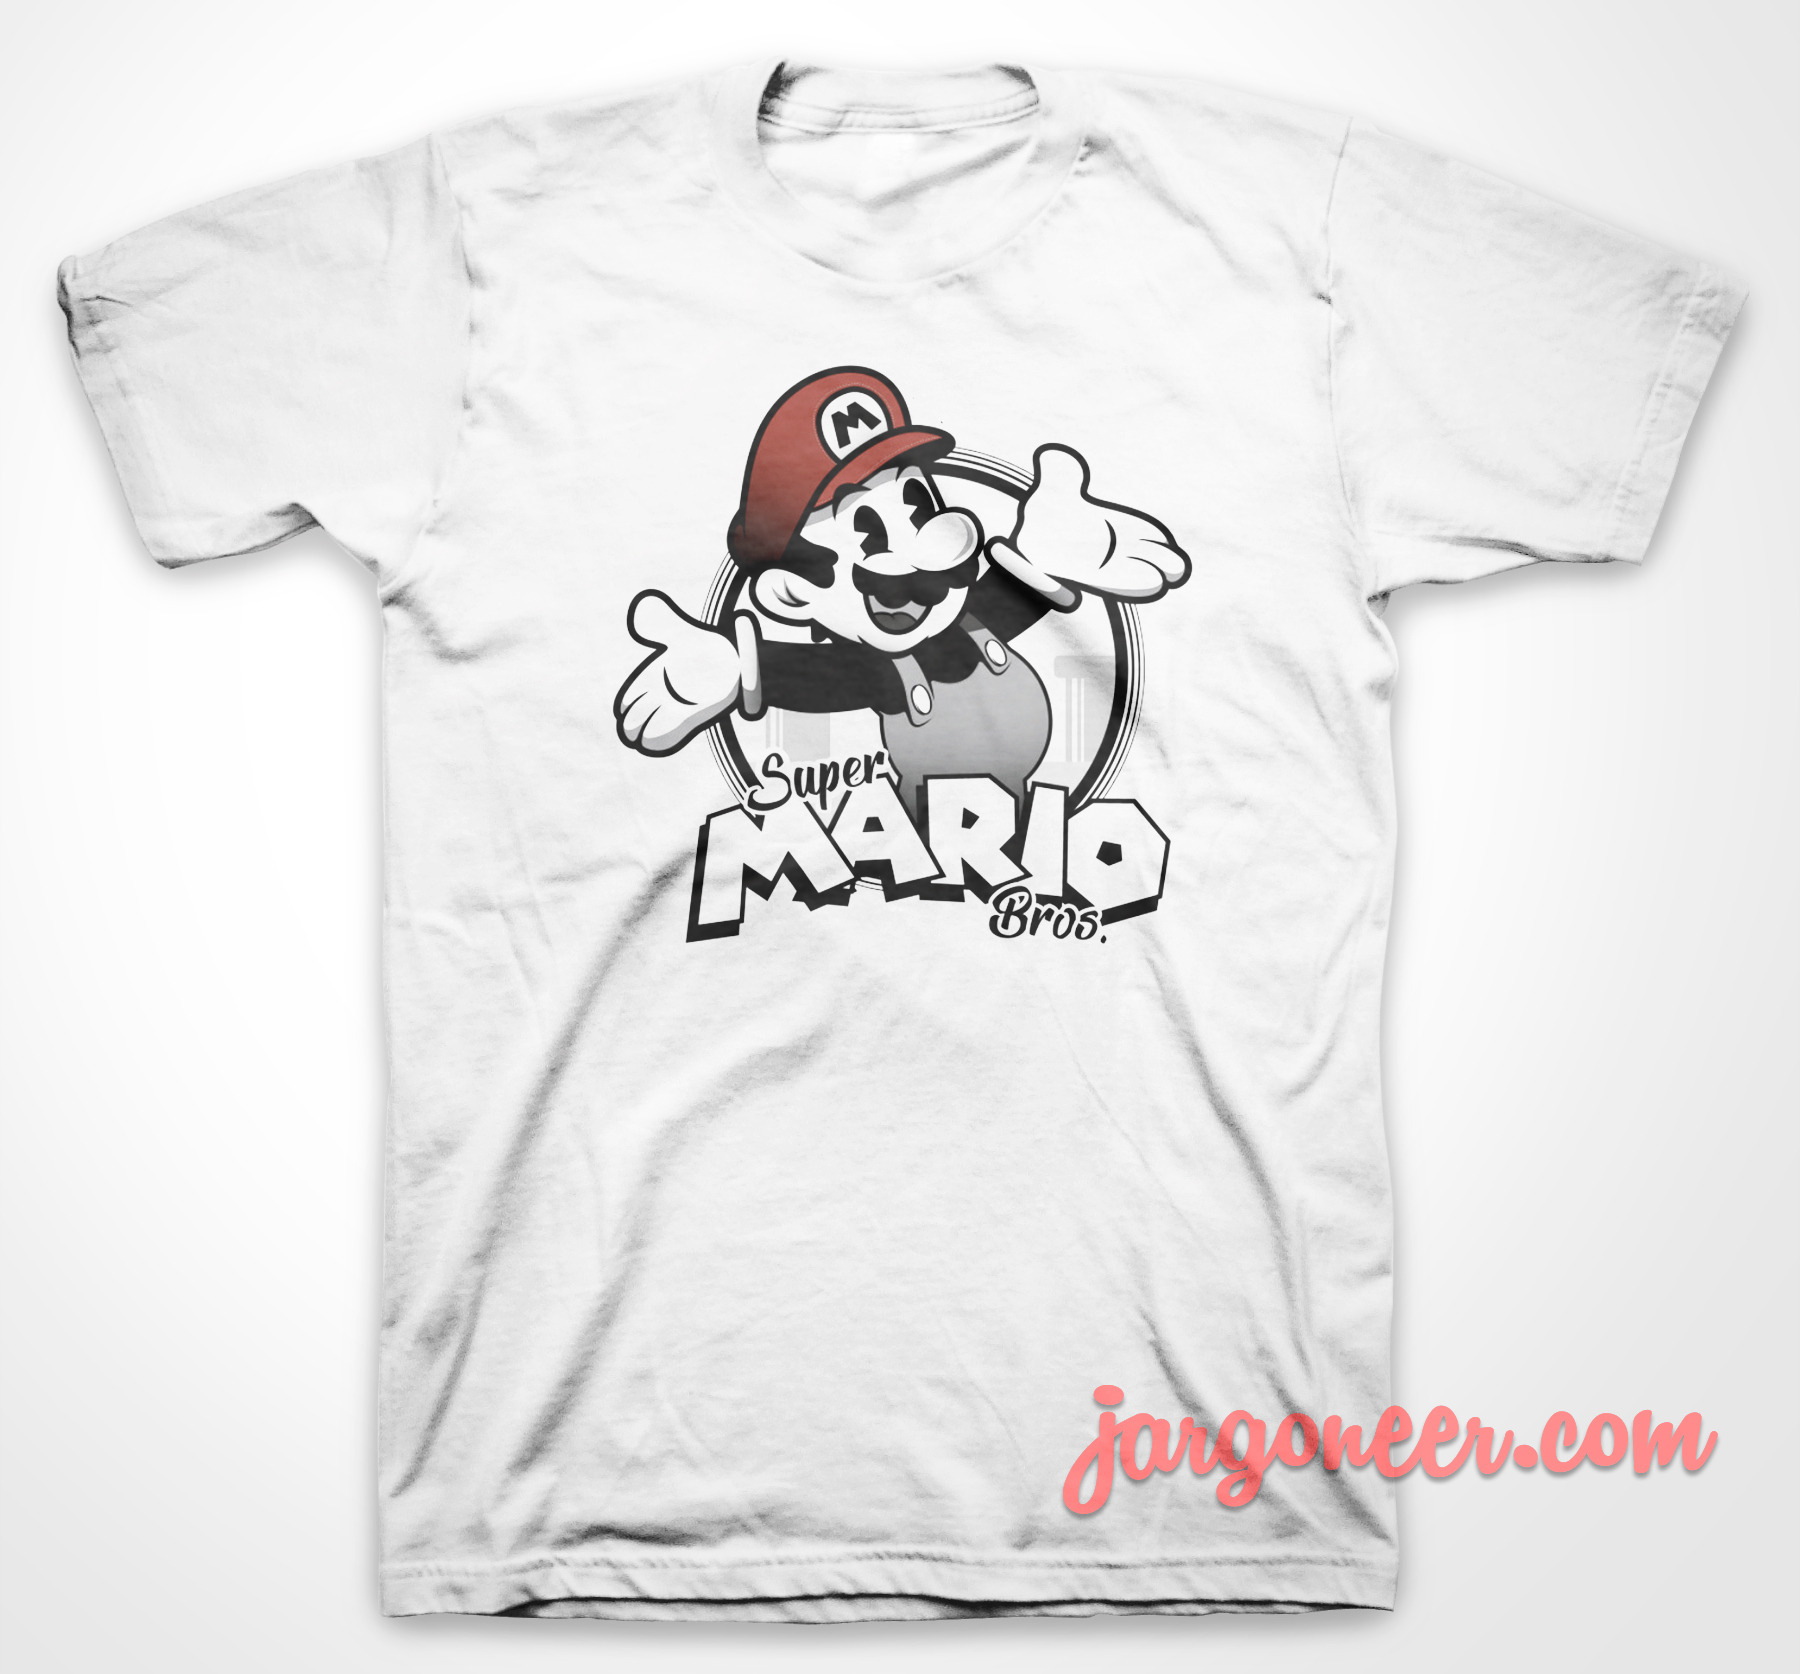 Super Mario Classic - Shop Unique Graphic Cool Shirt Designs